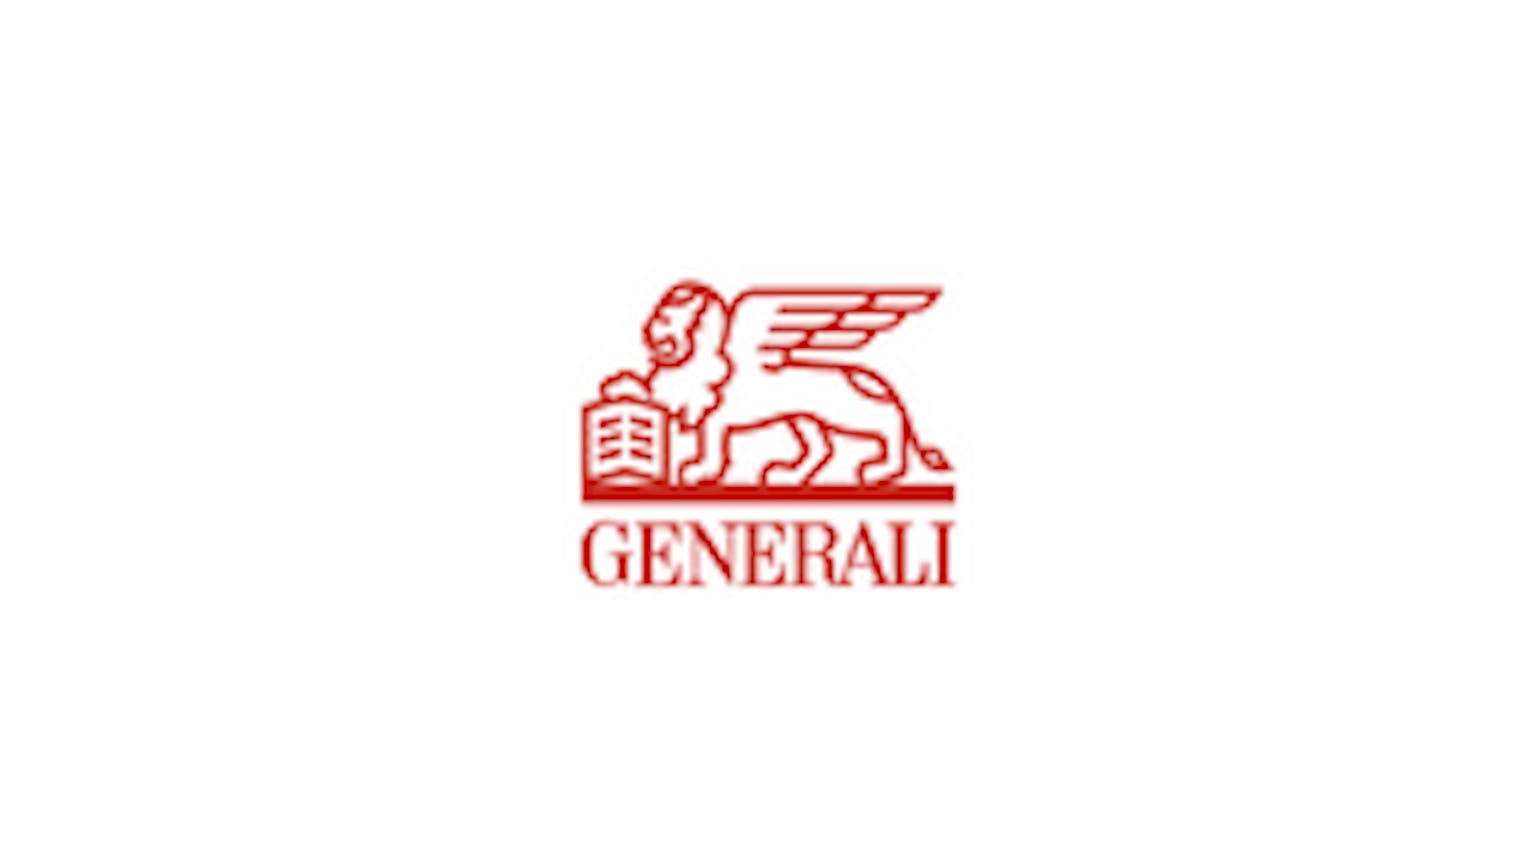 Generali GenSMART